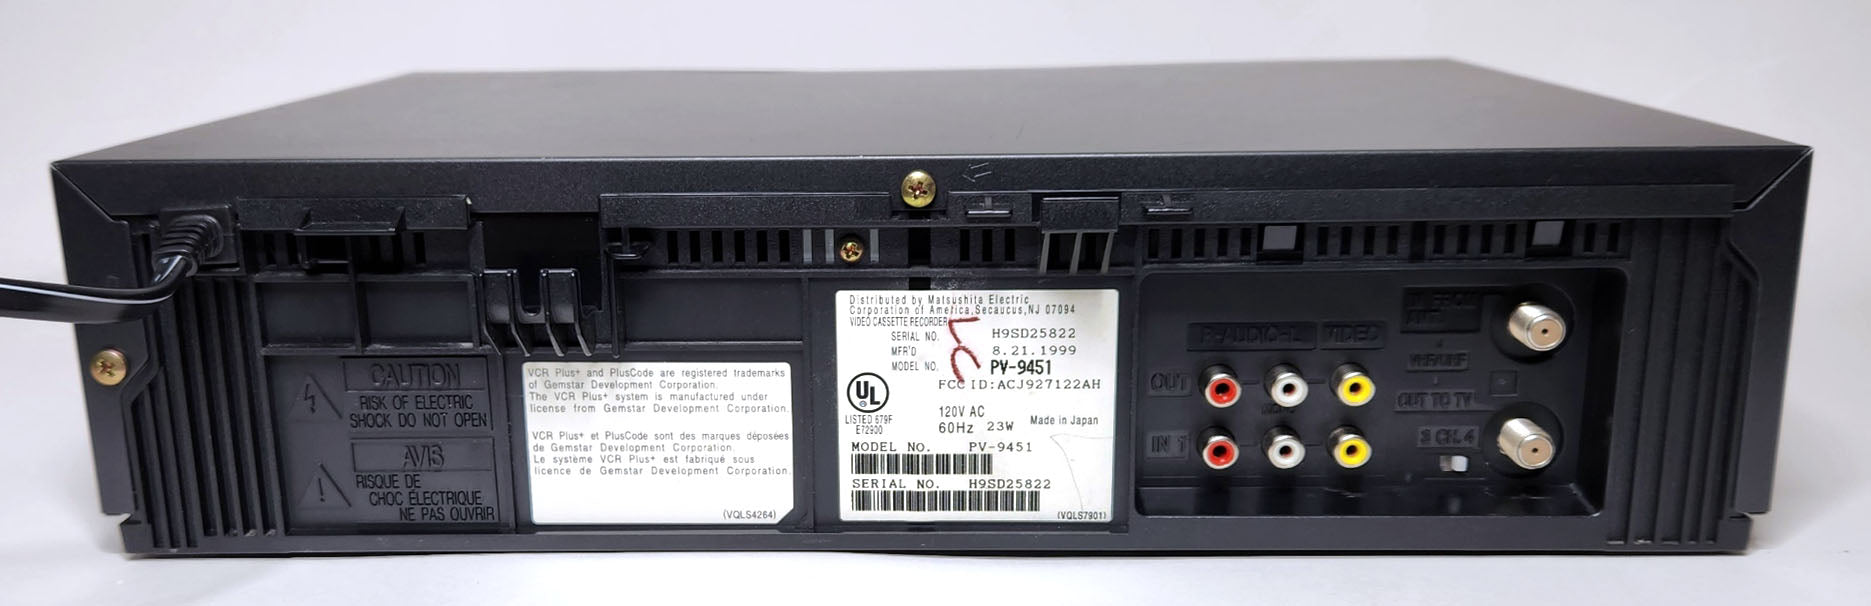 Panasonic PV-9451 Omnivision VCR, 4-Head Hi-Fi Stereo - Rear